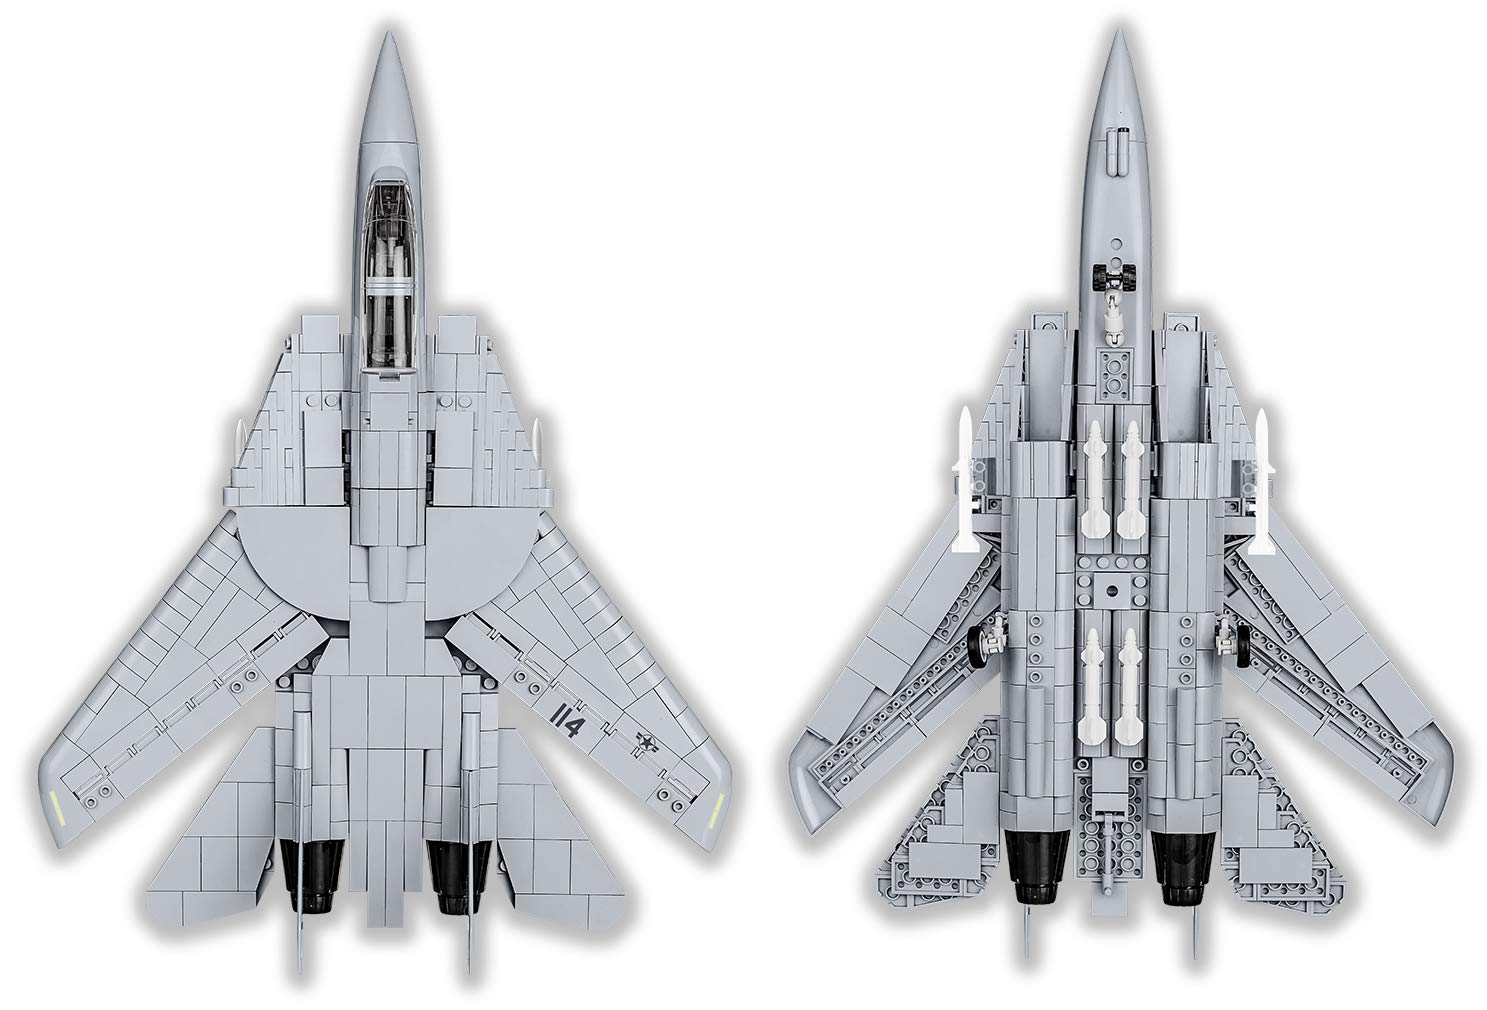 COBI Top Gun F-14A Tomcat Fighter Plane - 1:48 Scale 754 Piece Building Set with Maverick and Goose Figures